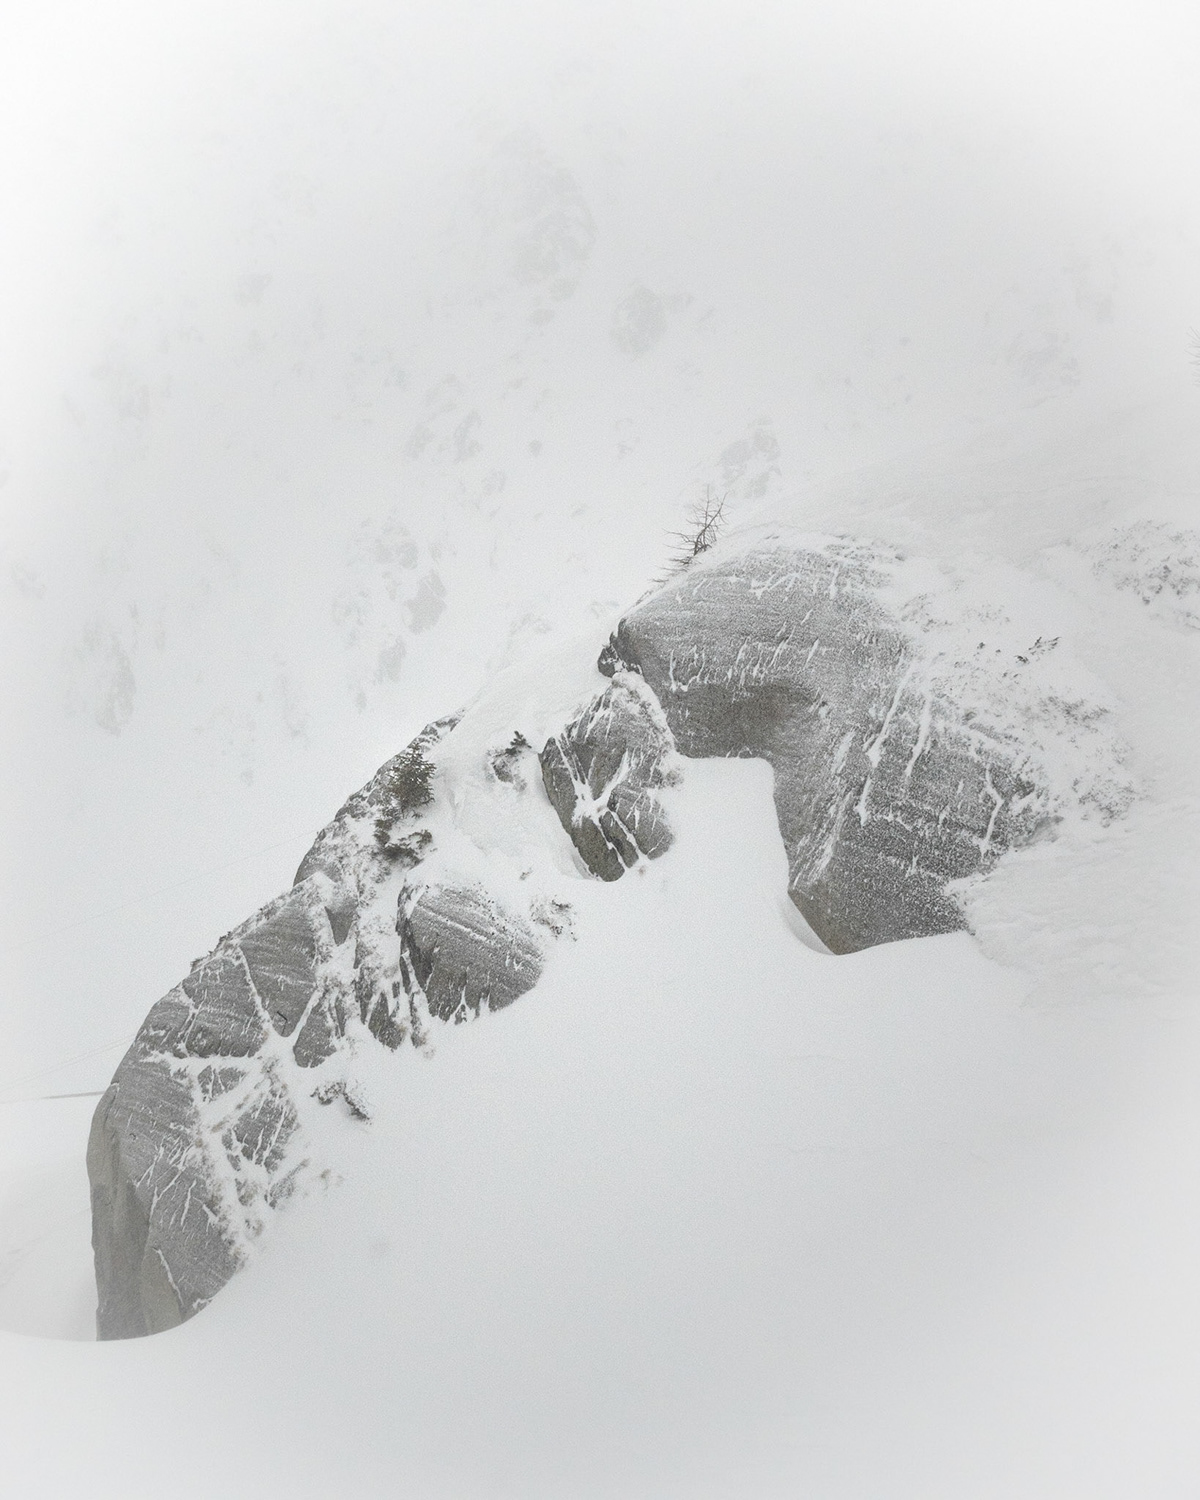 grimsel mimimalistic mountains snow storm swiss alps Switzerland White winter